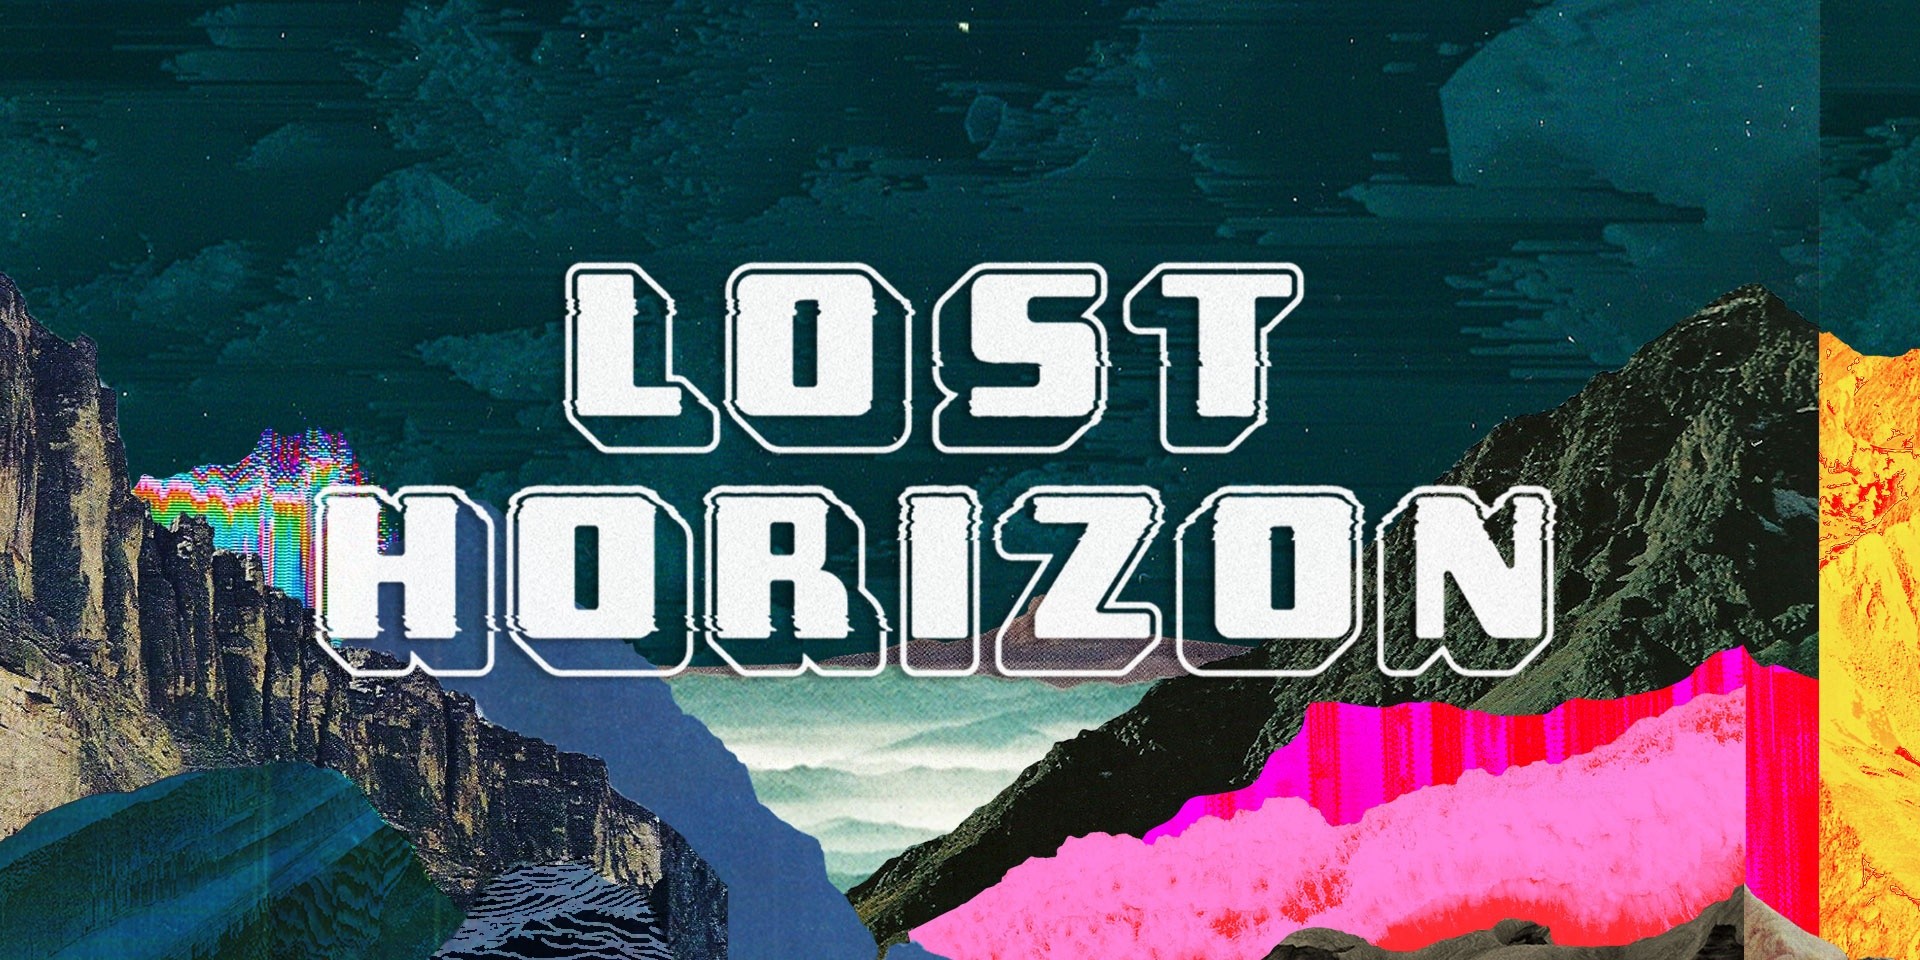 Glastonbury's Shangri-La announce 'Lost Horizon', the world’s largest virtual reality music and arts festival